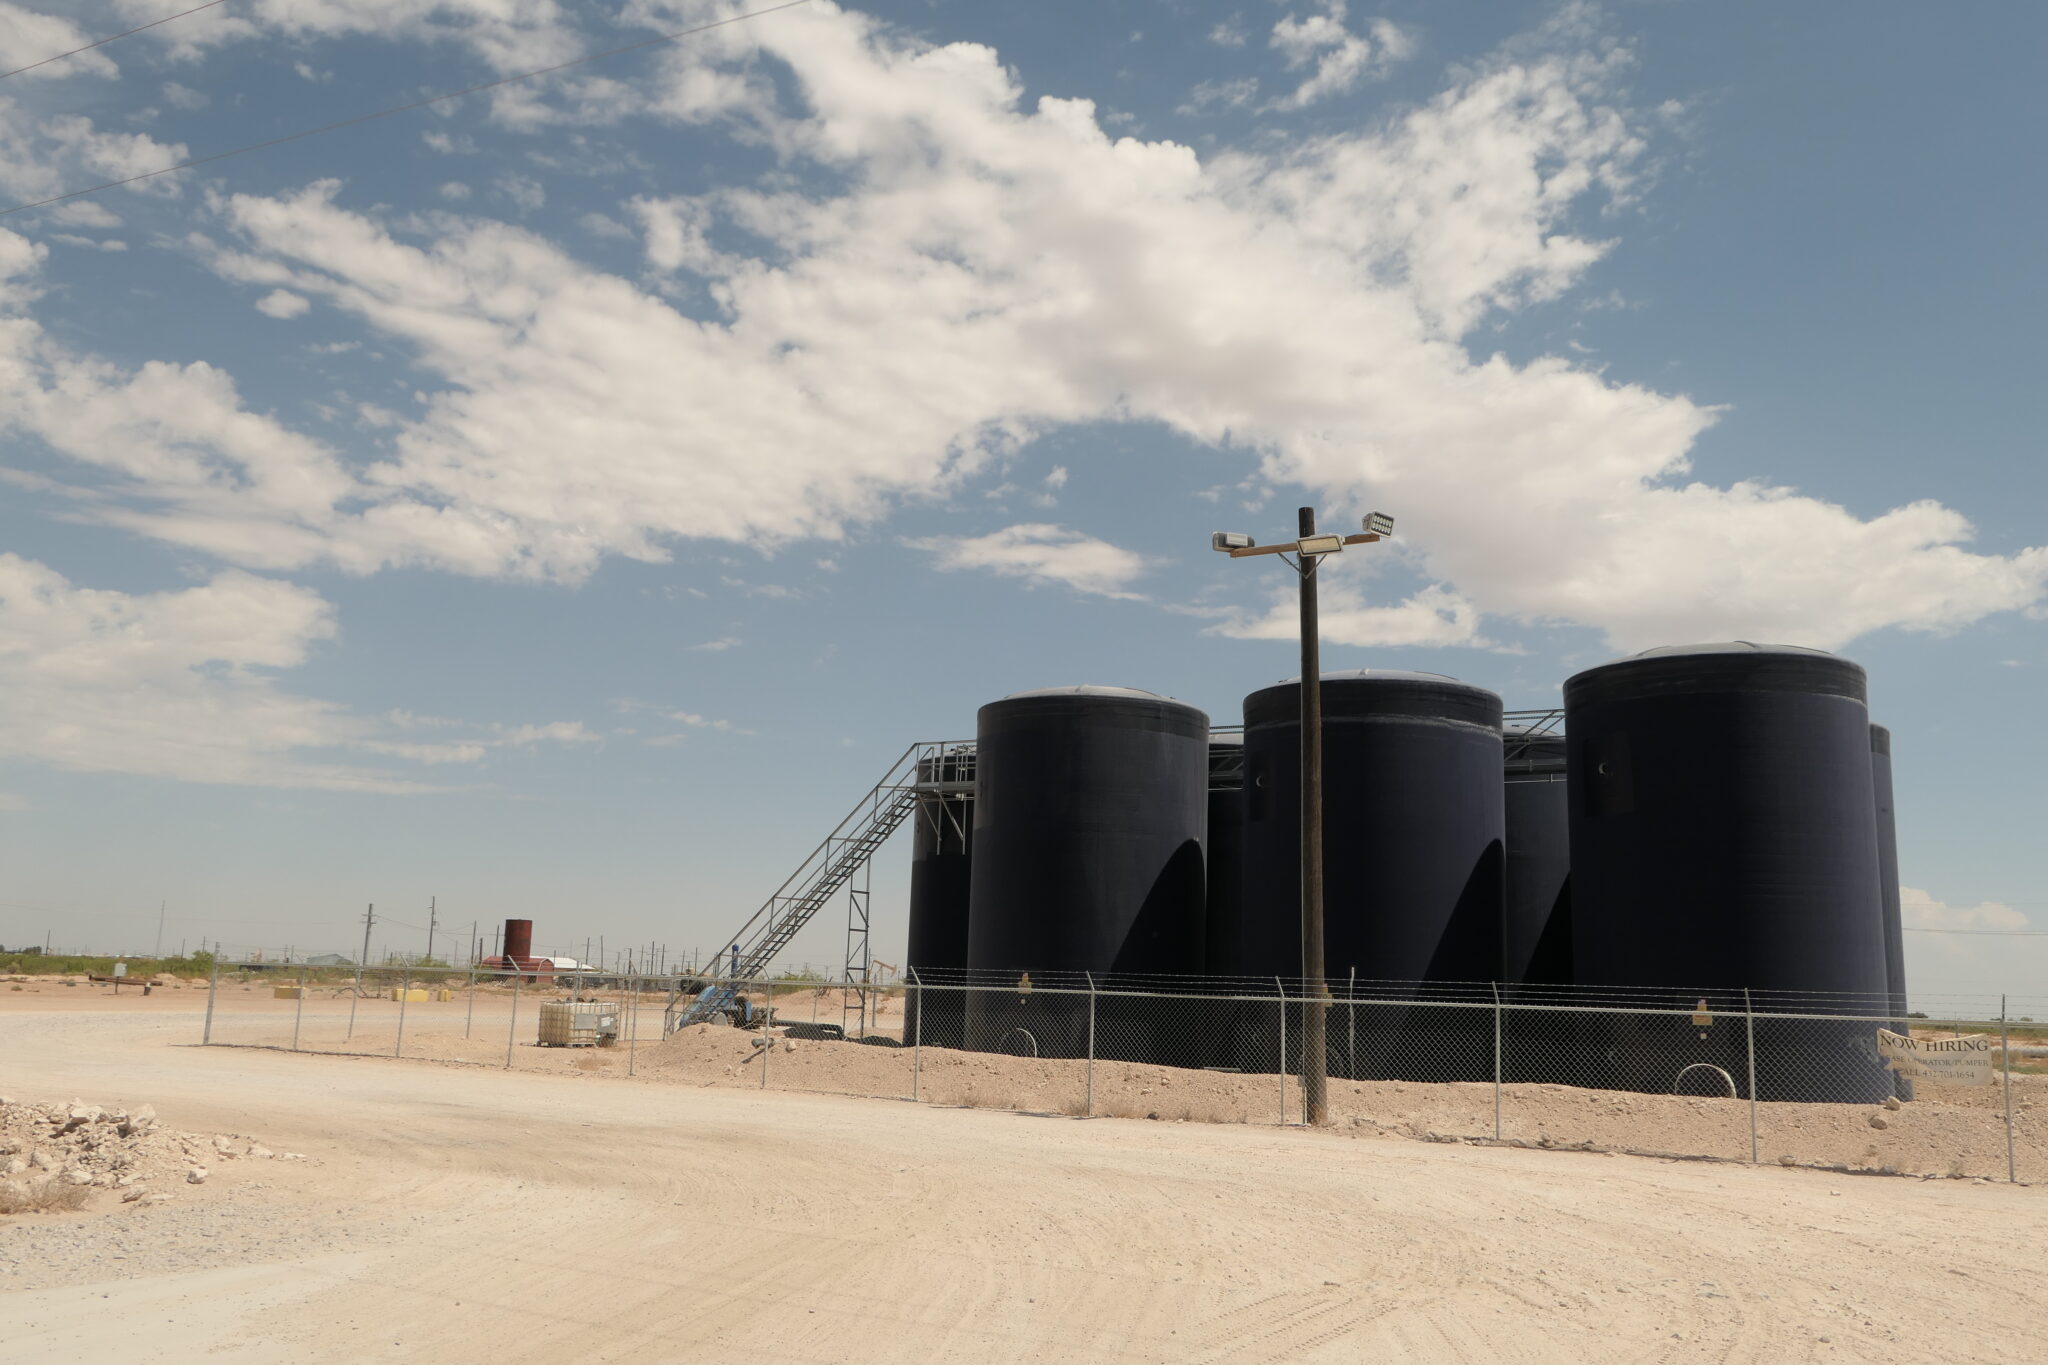 A series of huge black tanks sit in the desert under a blue sky.